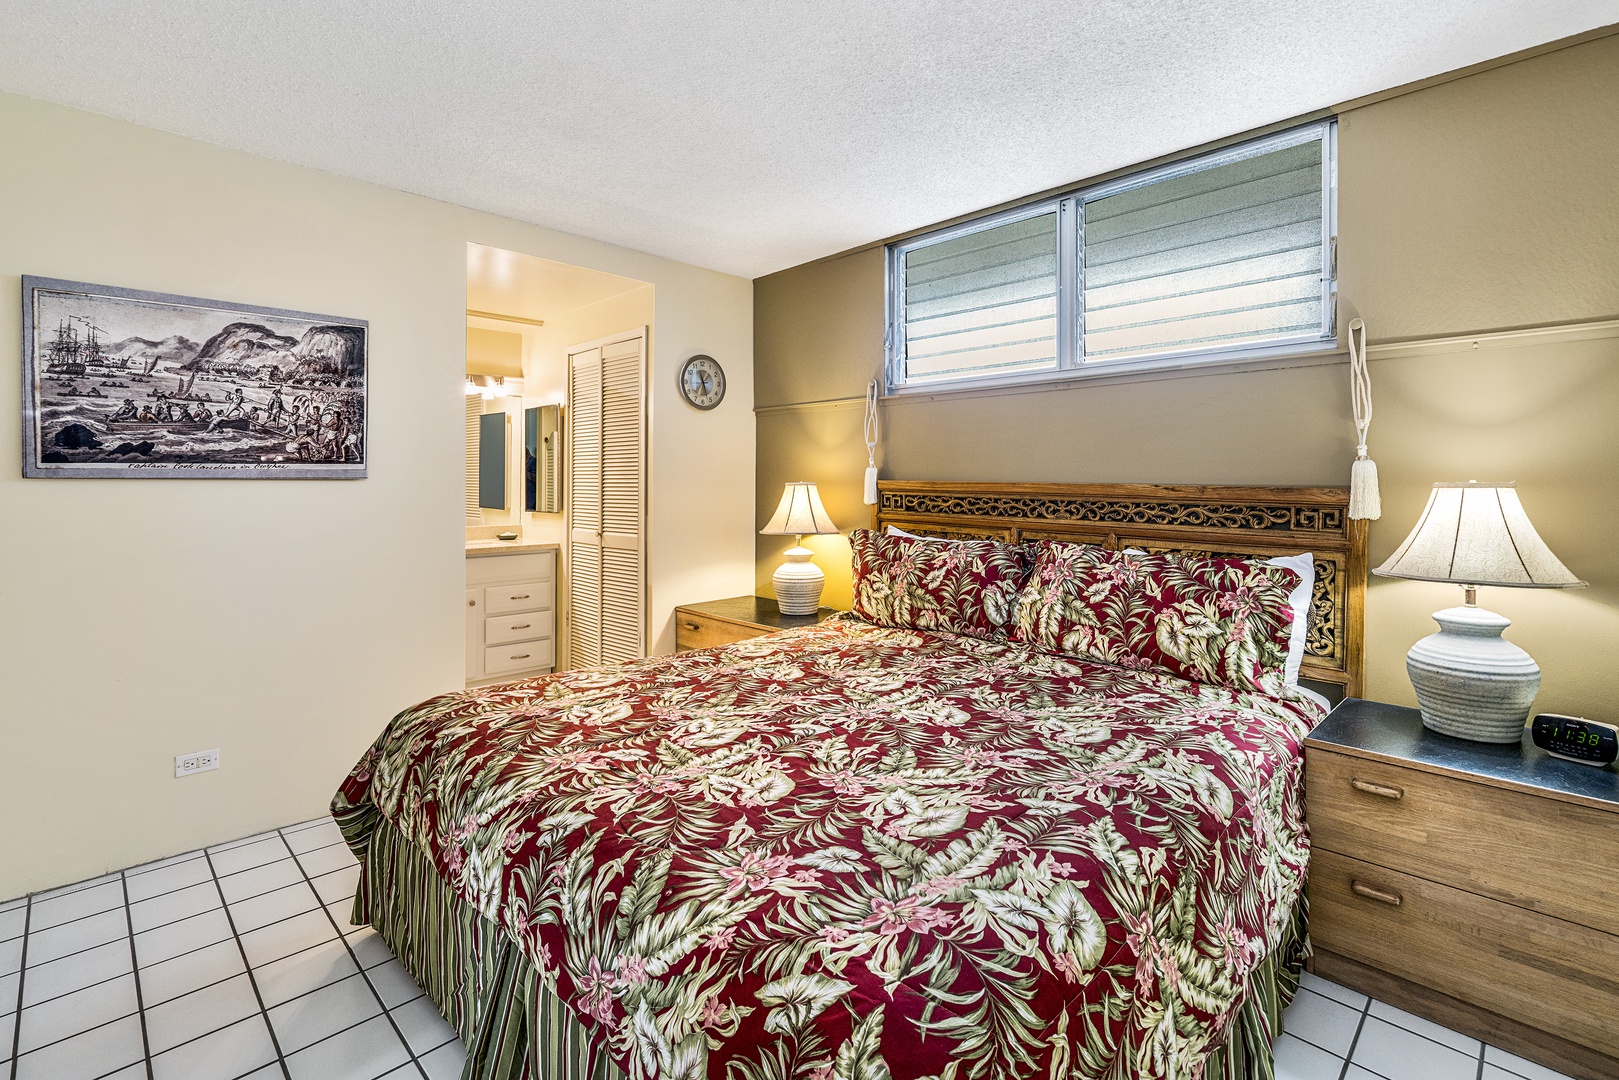 Kailua Kona Vacation Rentals, Kona Alii 304 - Bedroom featuring King sized bed